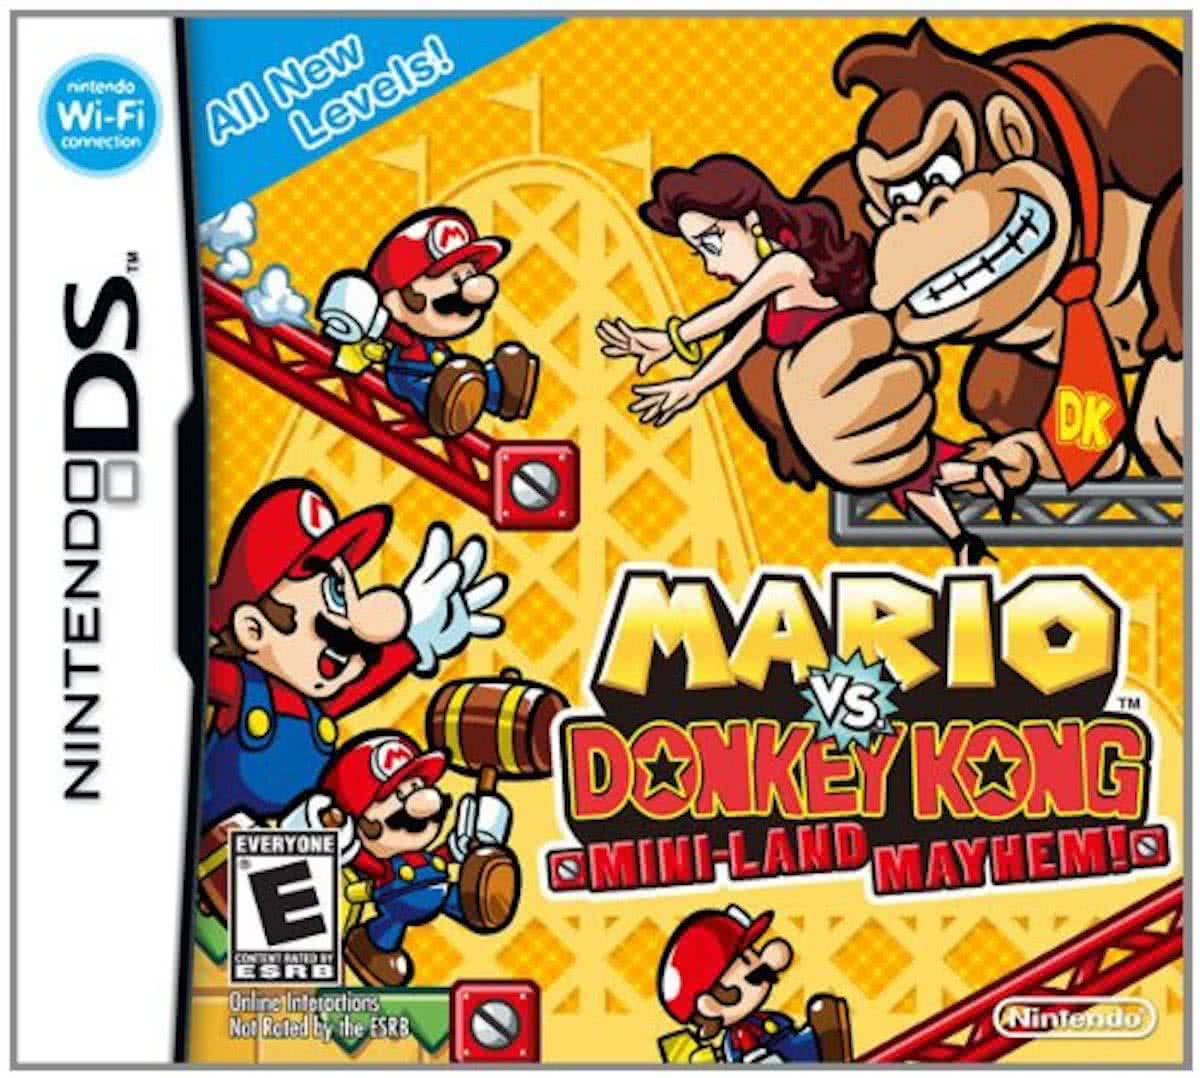 Mario Vs Donkey Kong 3: Mini-Land Mayhem